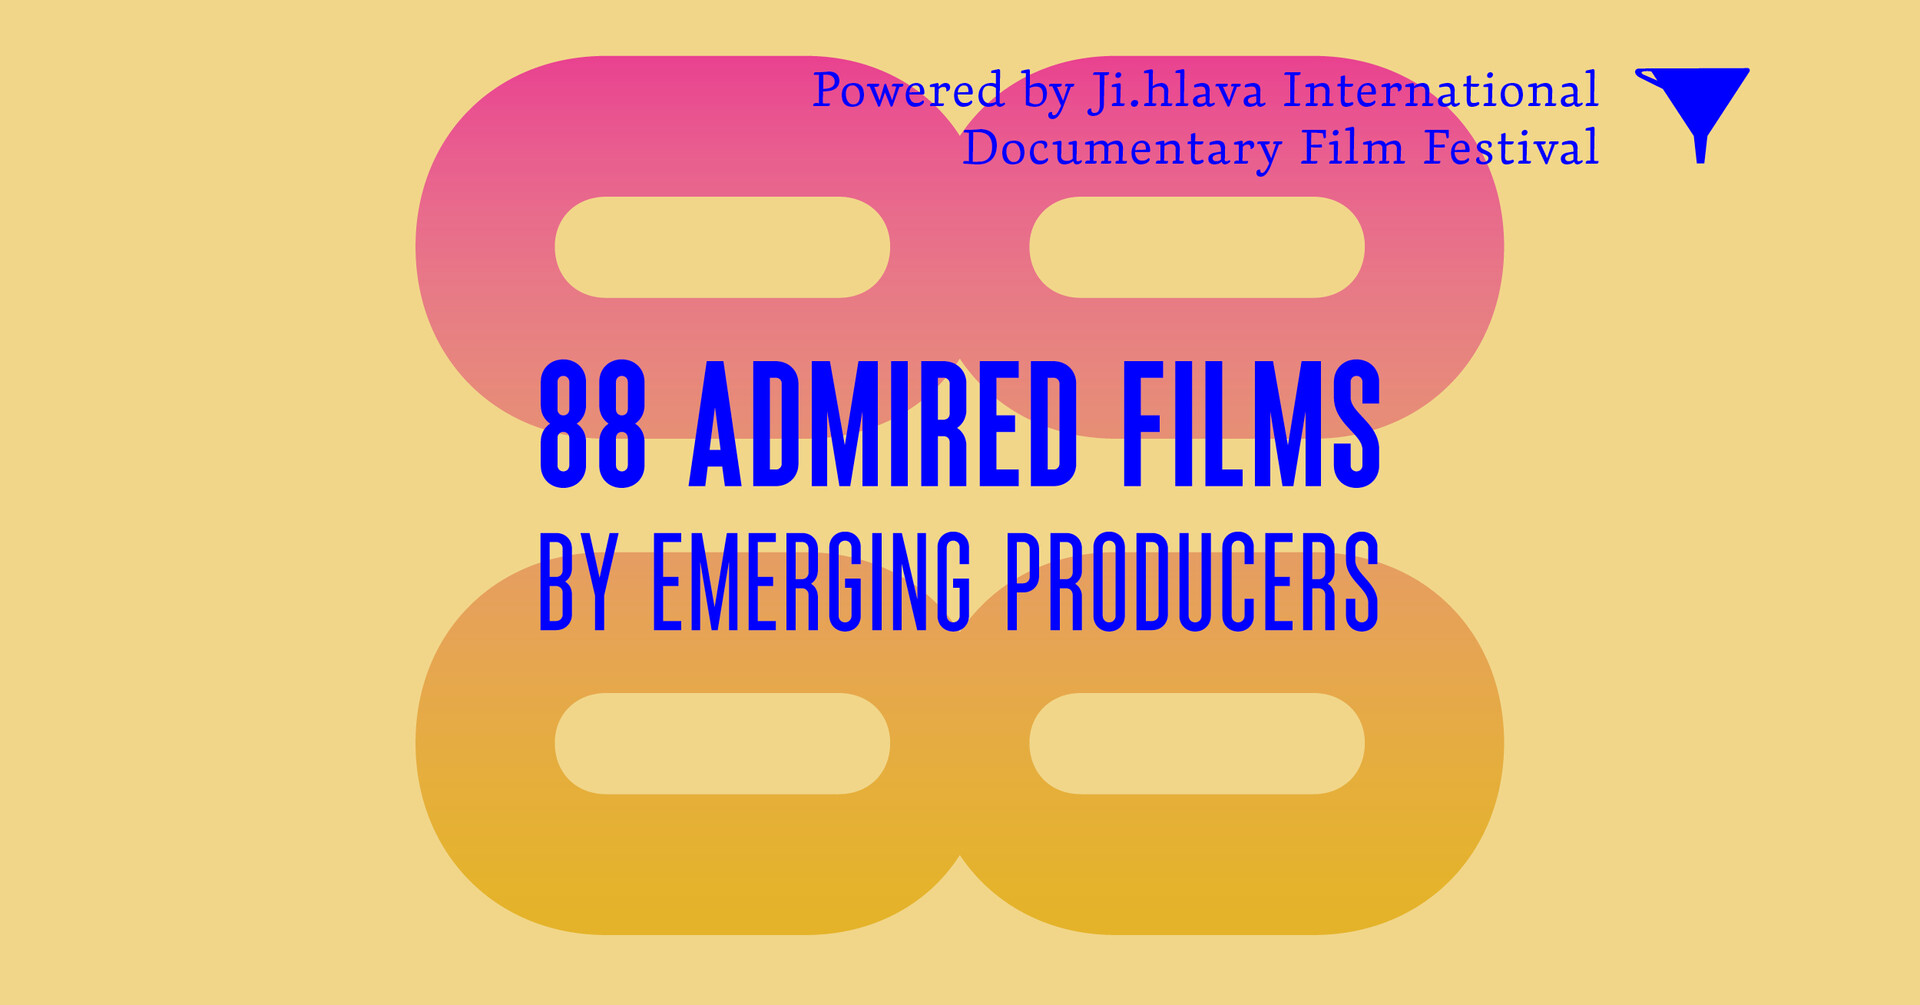 88 doporučených filmů od EMERGING PRODUCERS